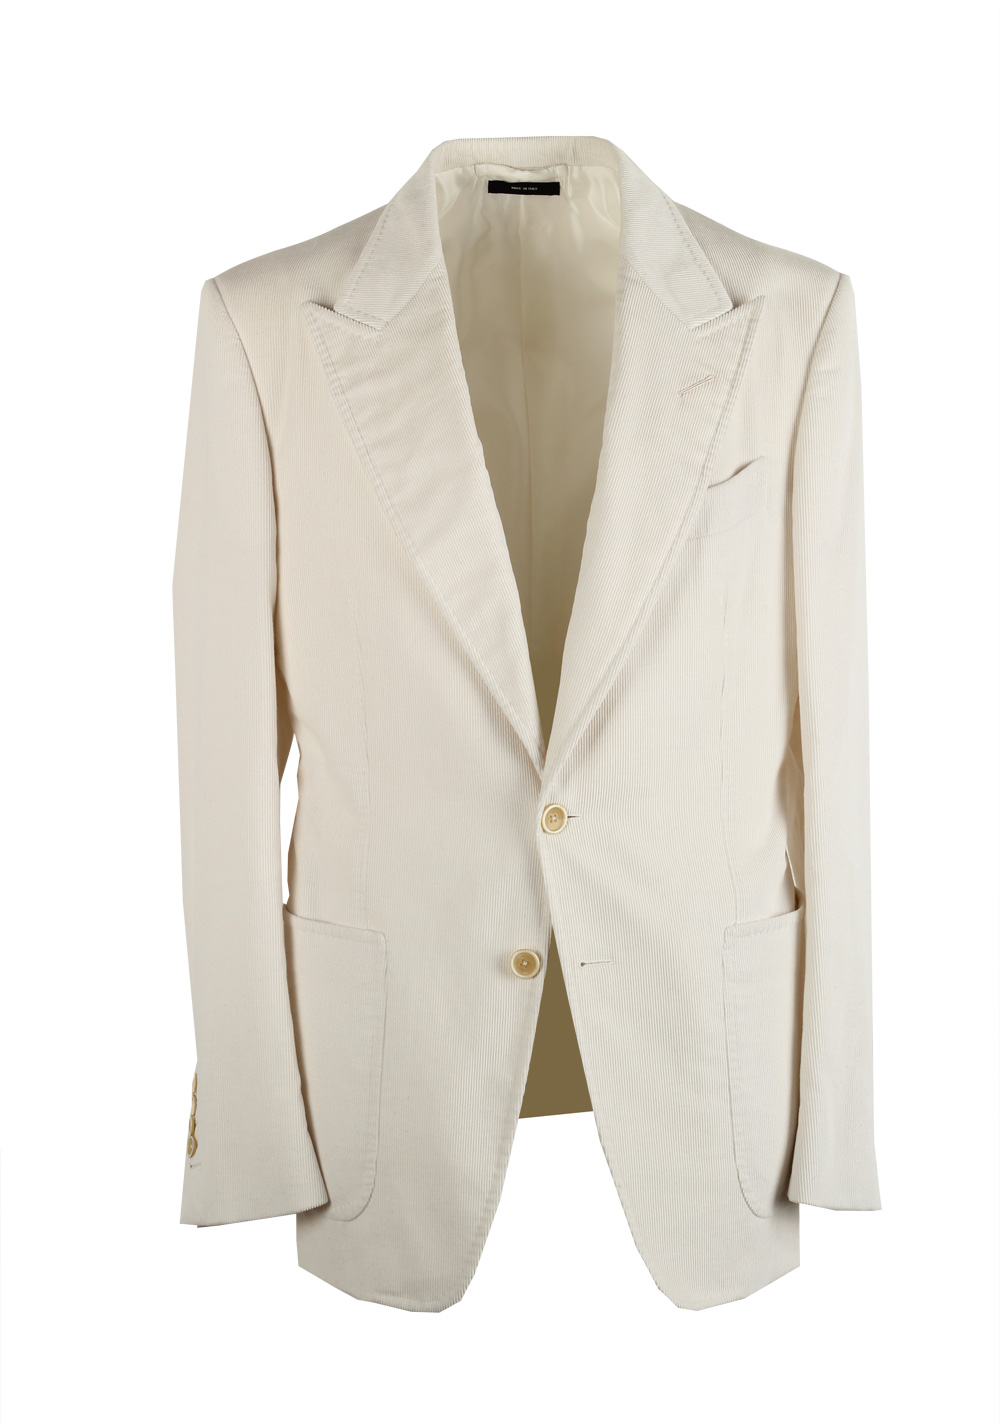 TOM FORD Shelton Off White Sport Coat Size 48 / 38R . In Cotton Linen |  Costume